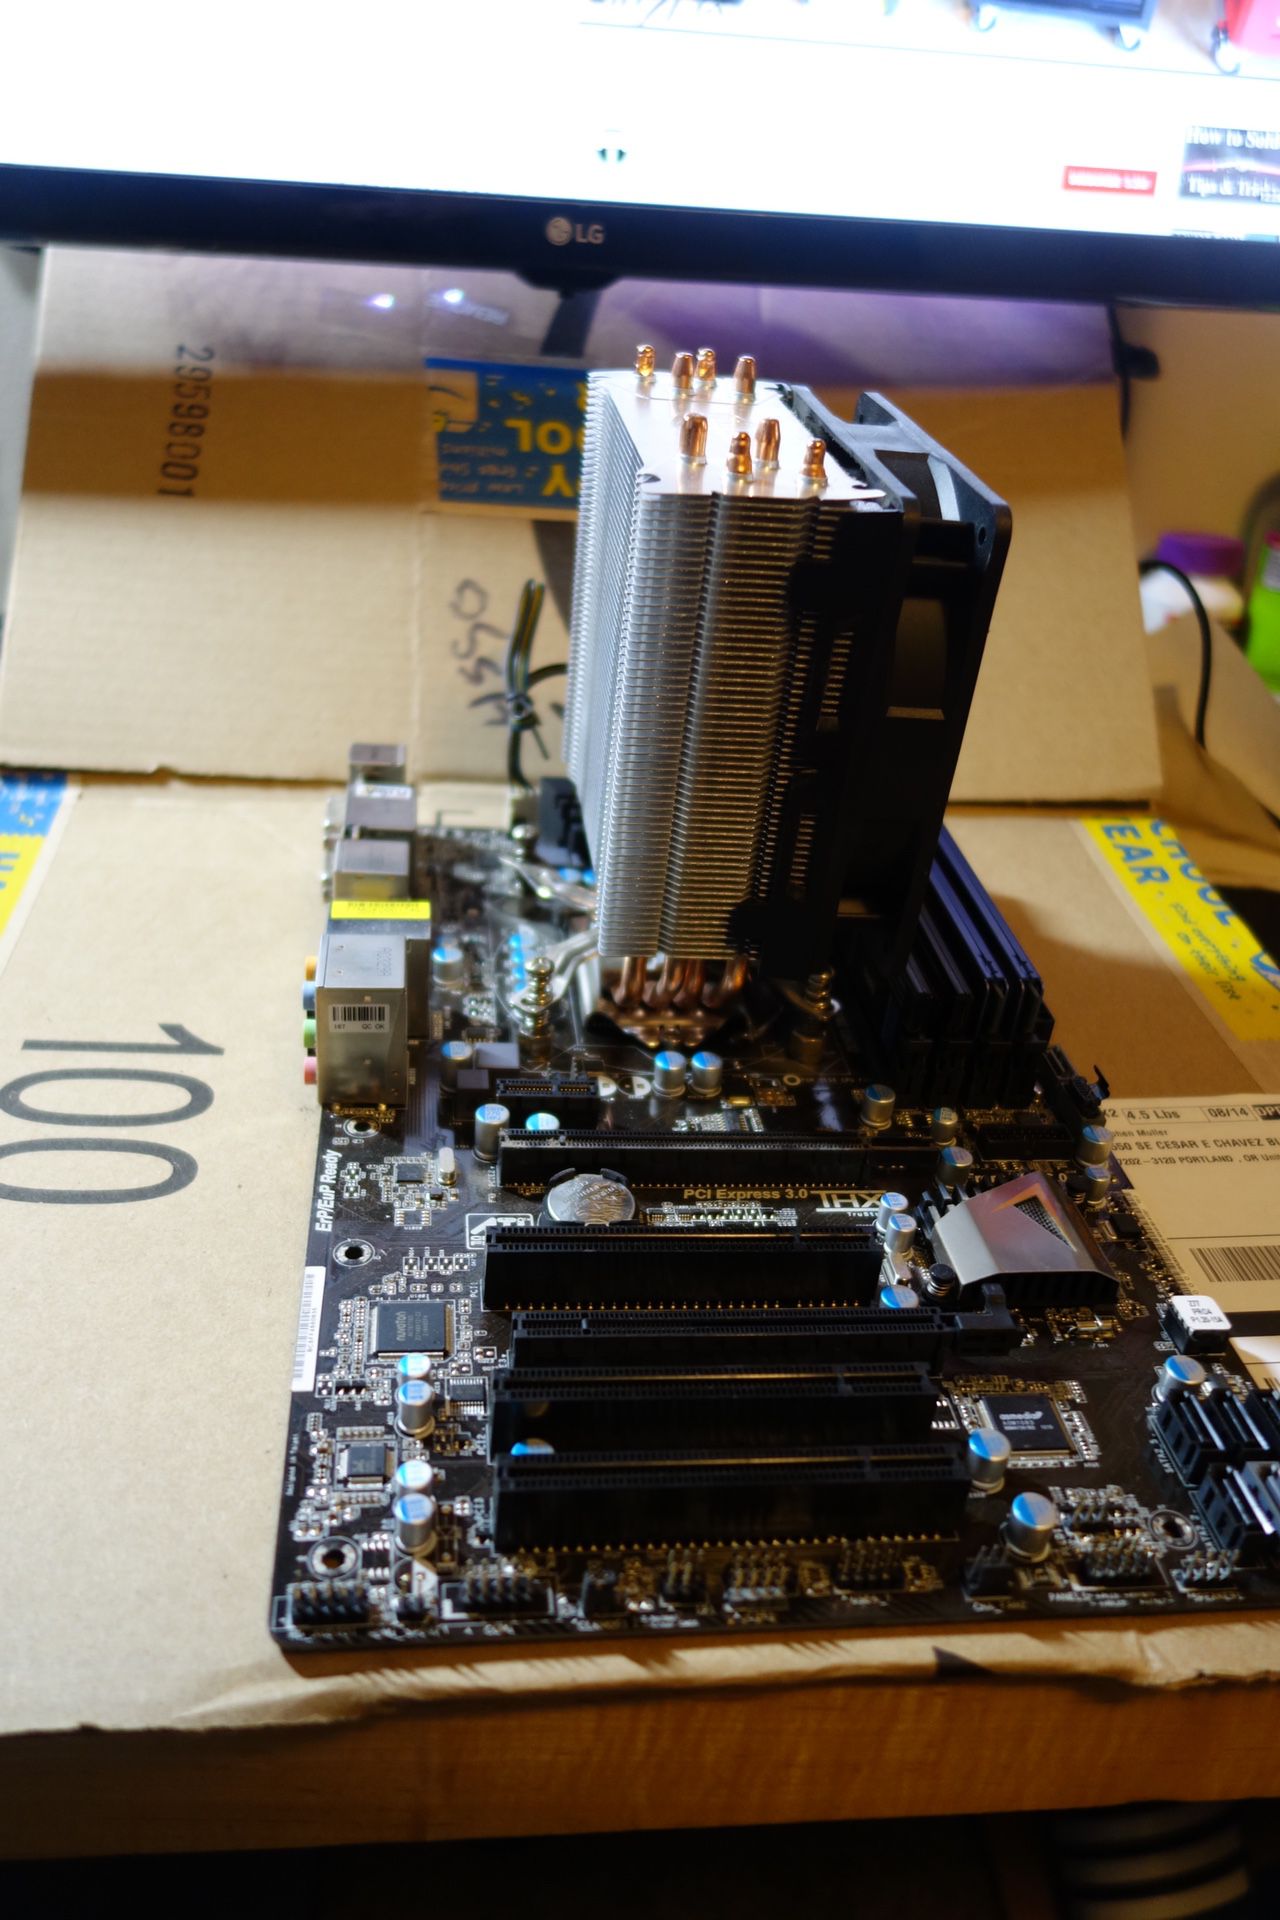 I5 3570k, asrock motherboard, hyper212+, 16gb Ram, asus AC WiFi card